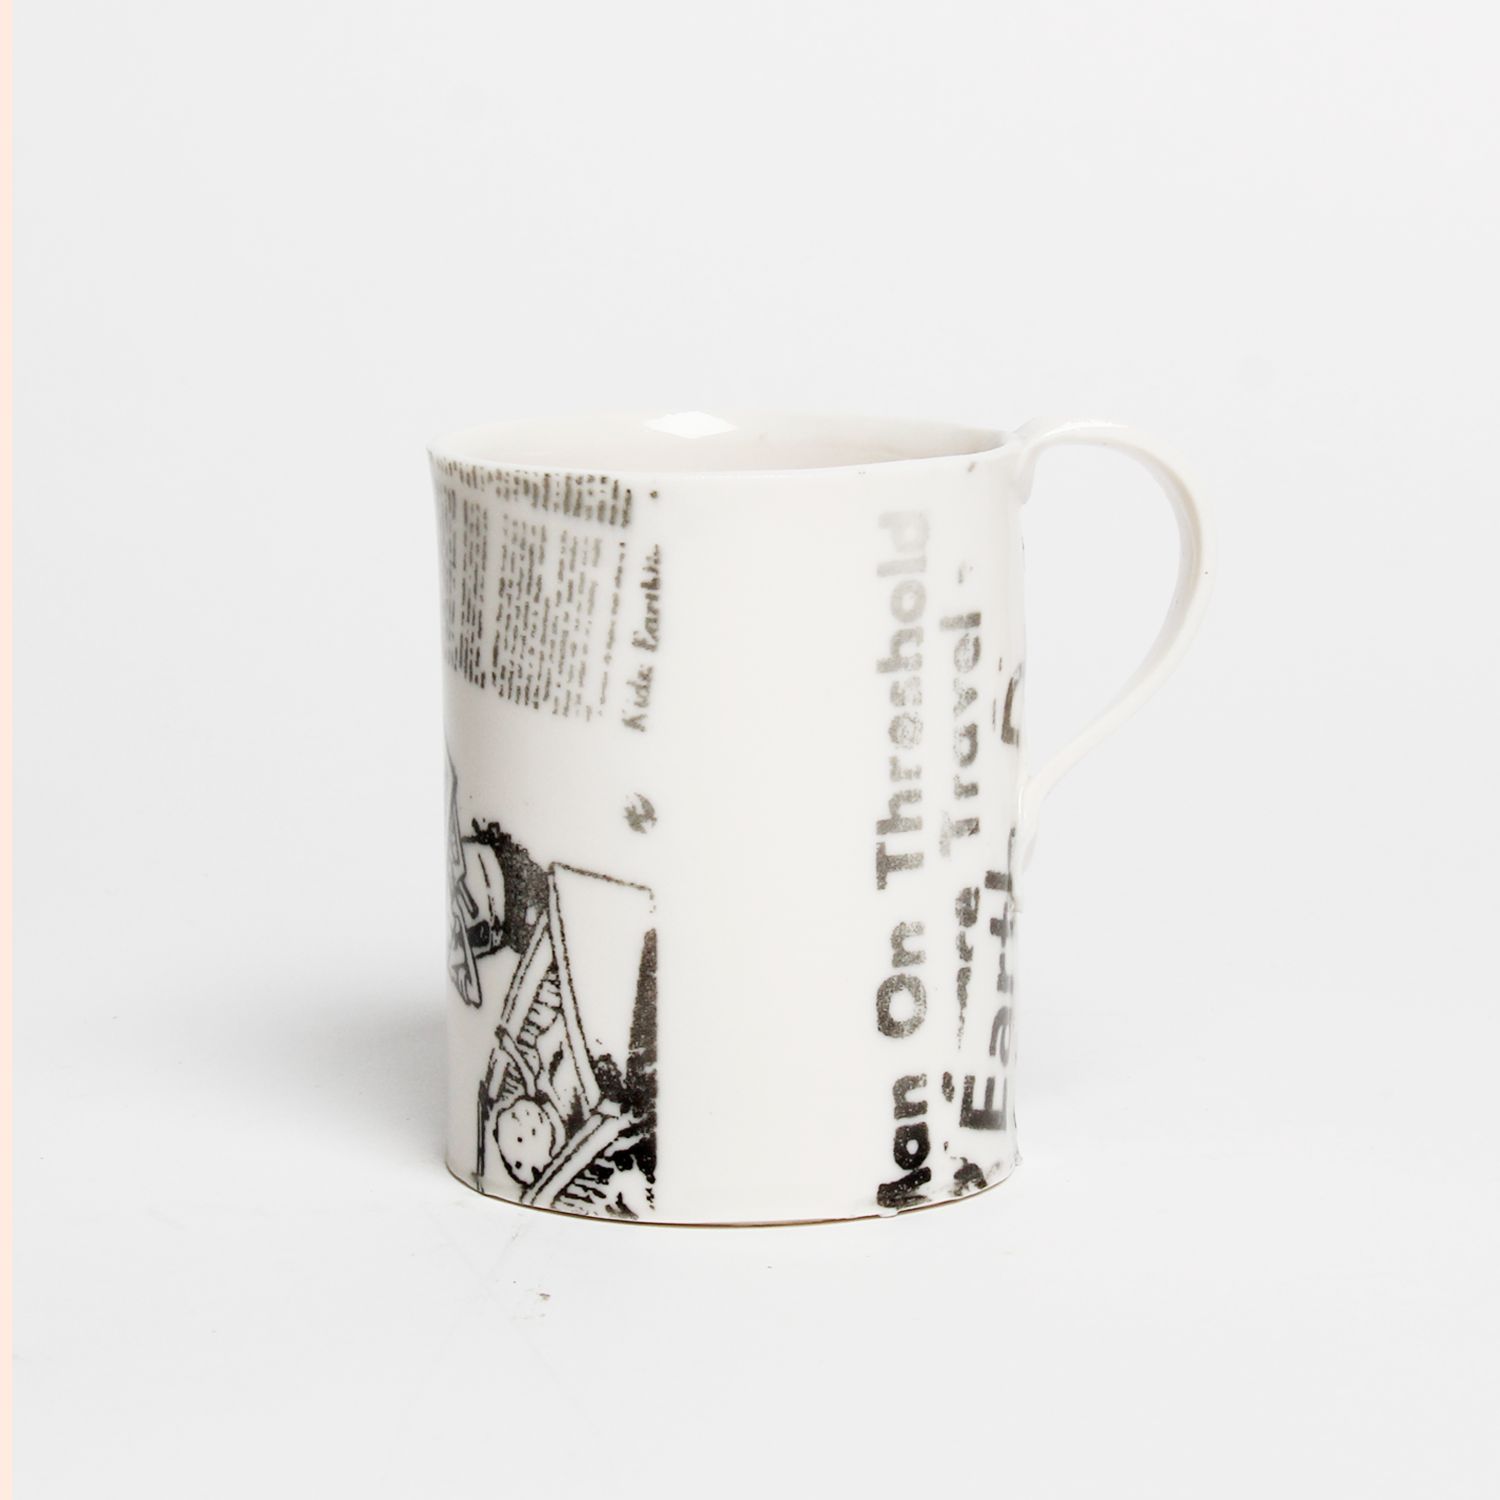 Catharina Goldnau: Newsprint Mug Product Image 3 of 4